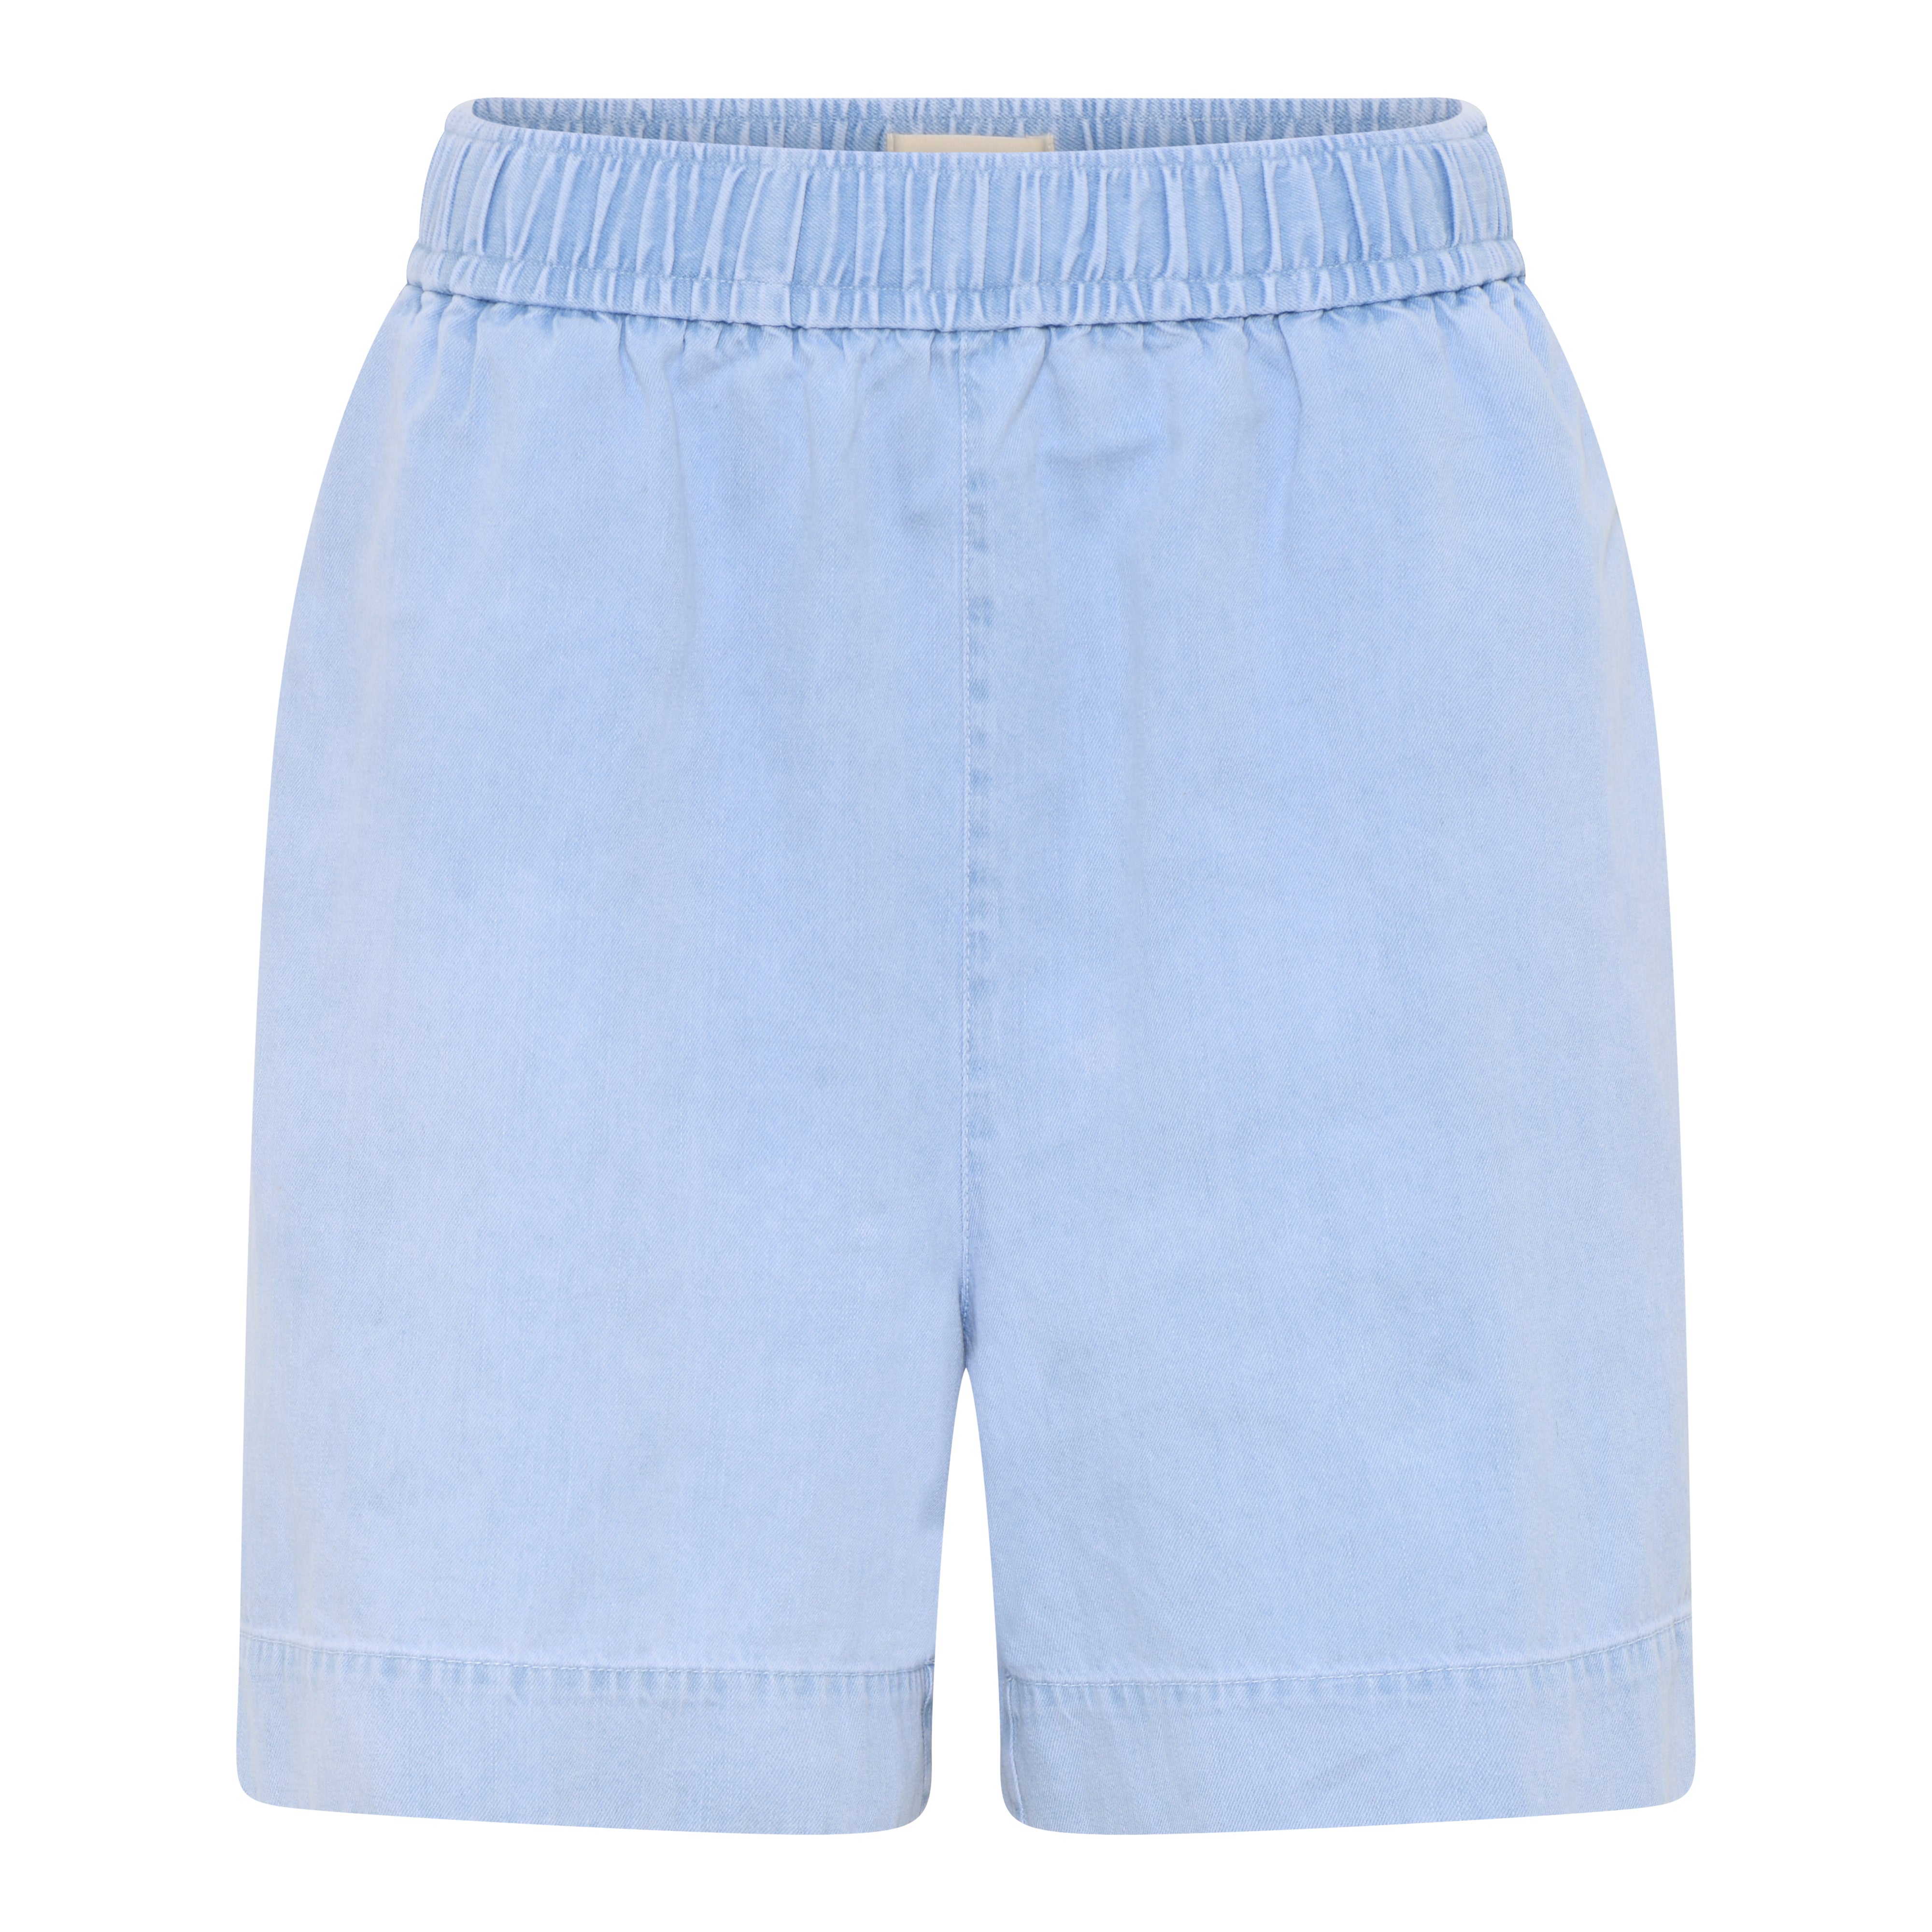 Frau Sydney denim shorts light blue denim